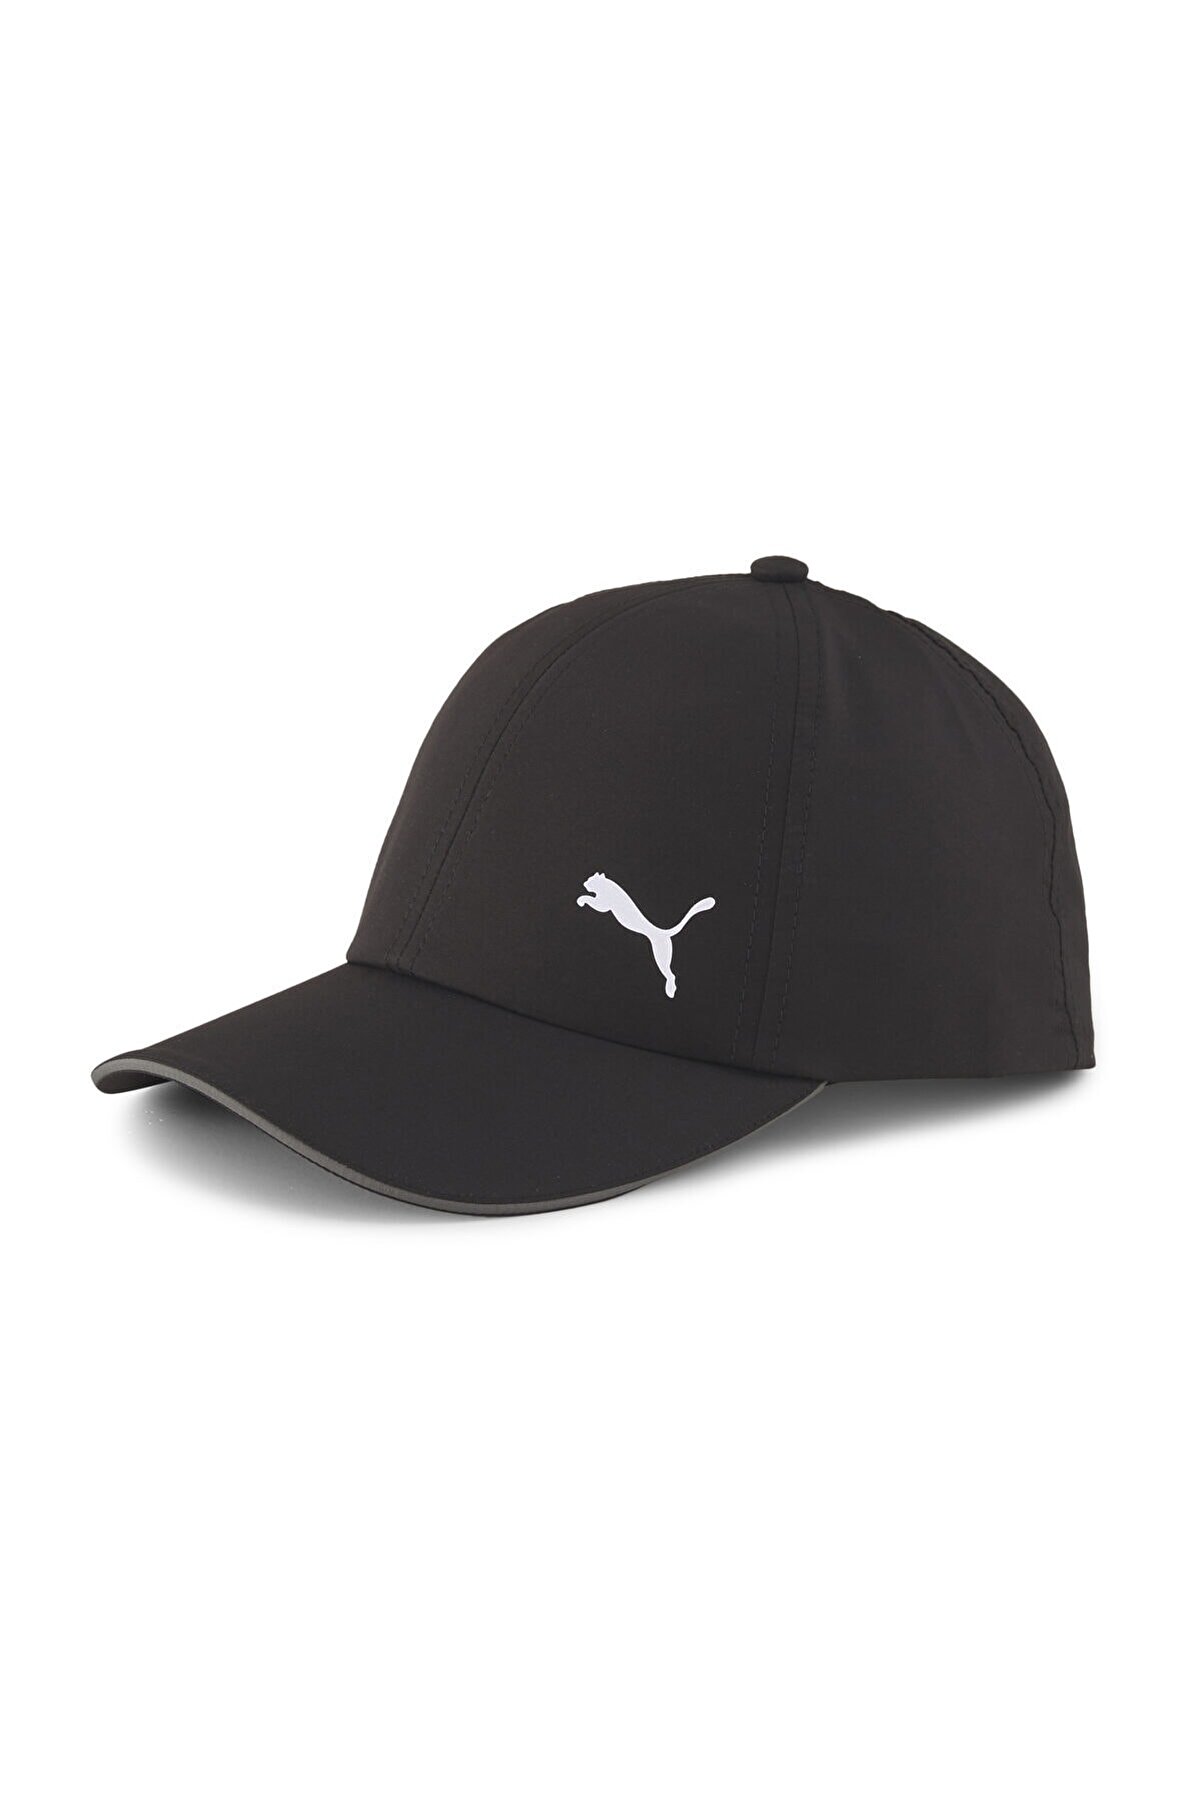 Puma Ess Running Cap - Unisex Siyah Şapka